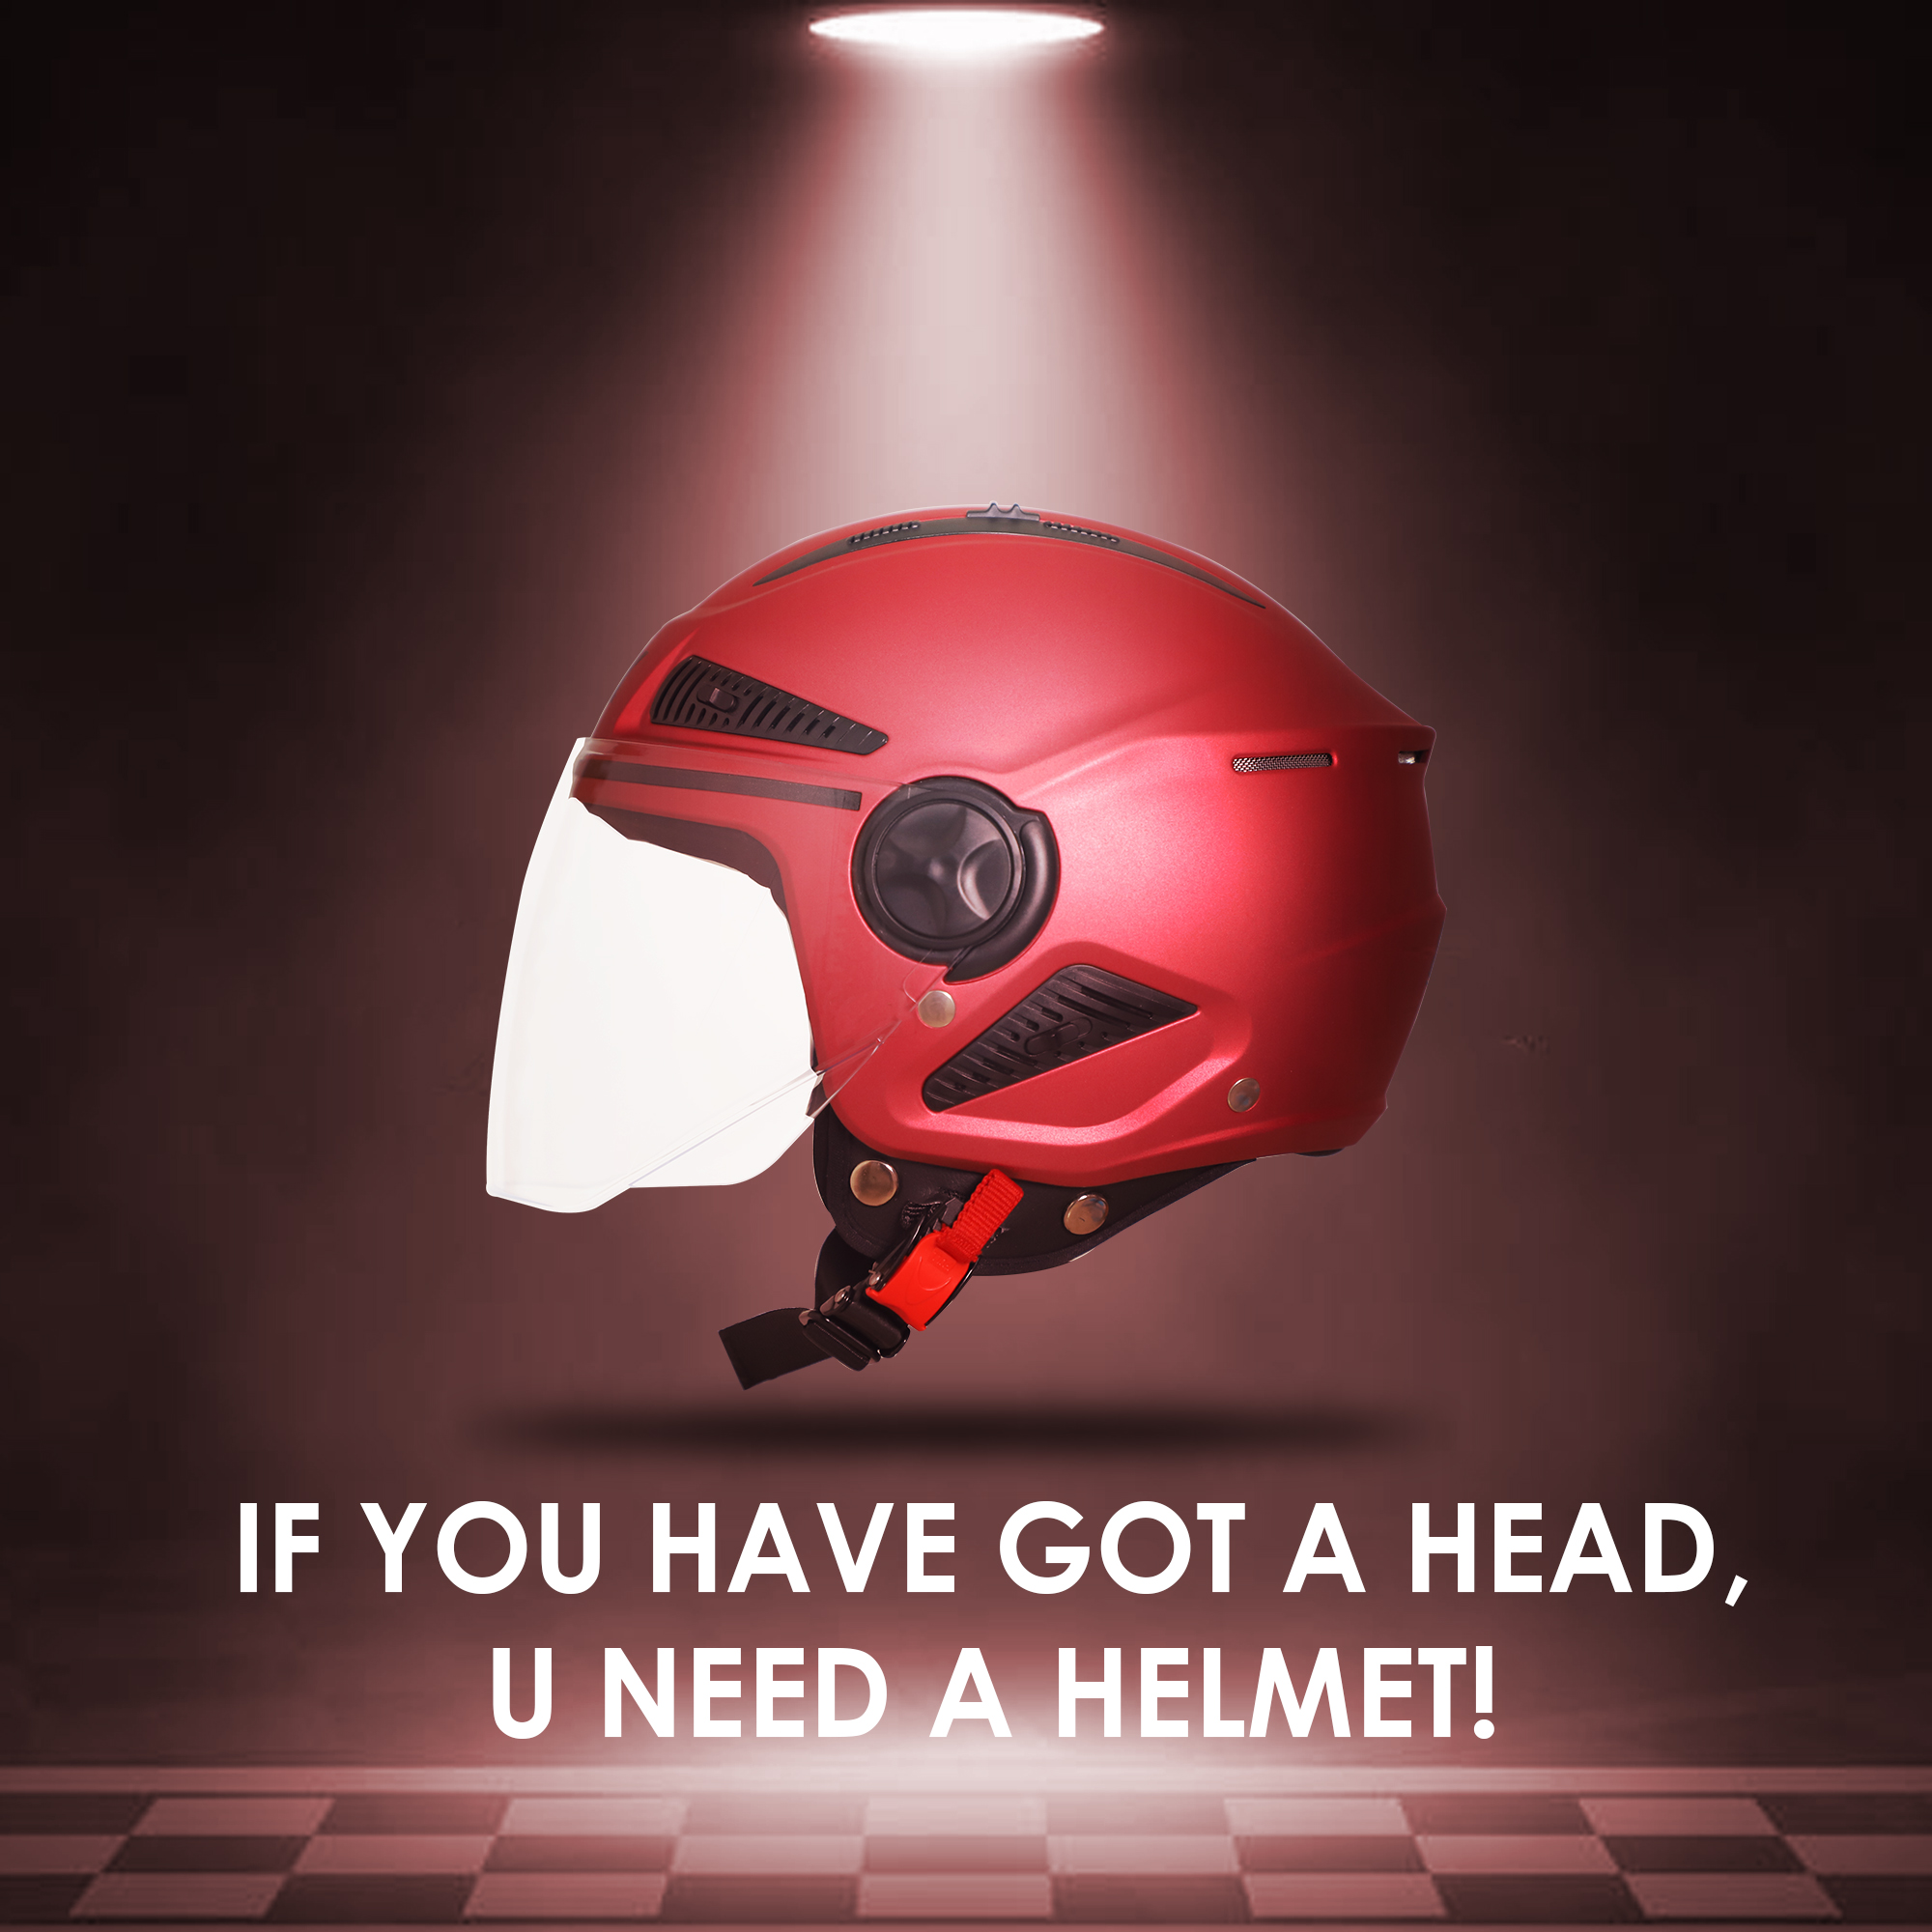 Steelbird SBH-24 Boxx ISI Certified Open Face Helmet For Men And Women (Matt Metallic Pink With Clear Visor)